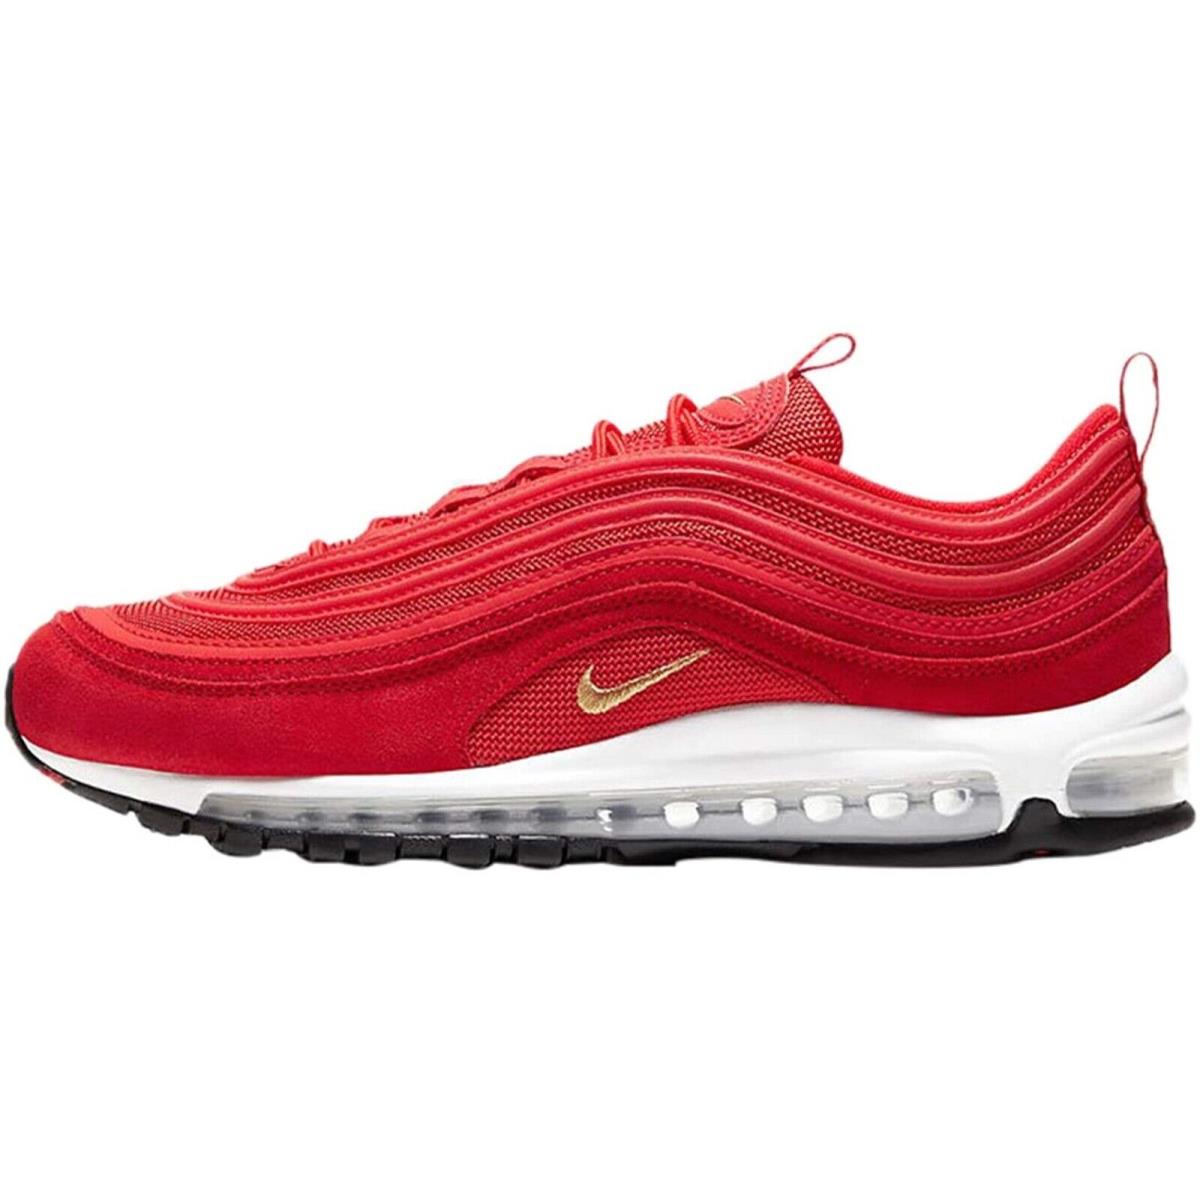 Men`s Nike Air Max 97 `olympic Rings Pack Red` Sneakers CI3708 600 - Multicolor